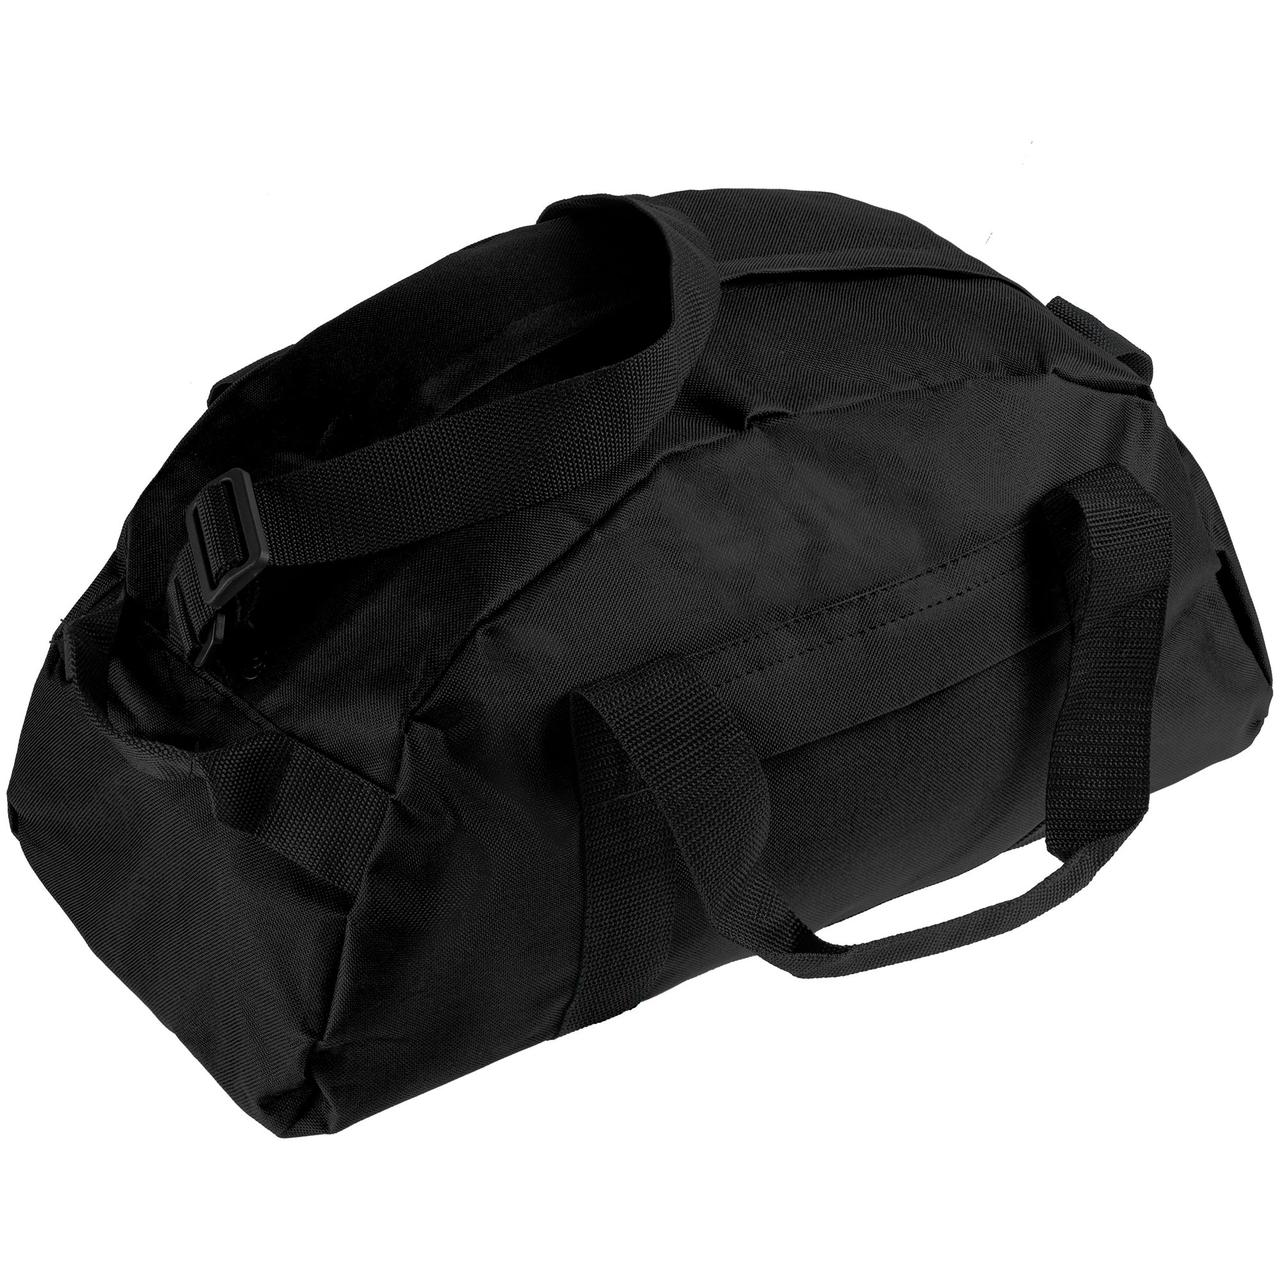 Черная спортивная сумка. Спортивная сумка Portage. Спортивная сумка Portage, черная. Сумка molti Nessi 12491.30. Сумка черная спортивная мужская.